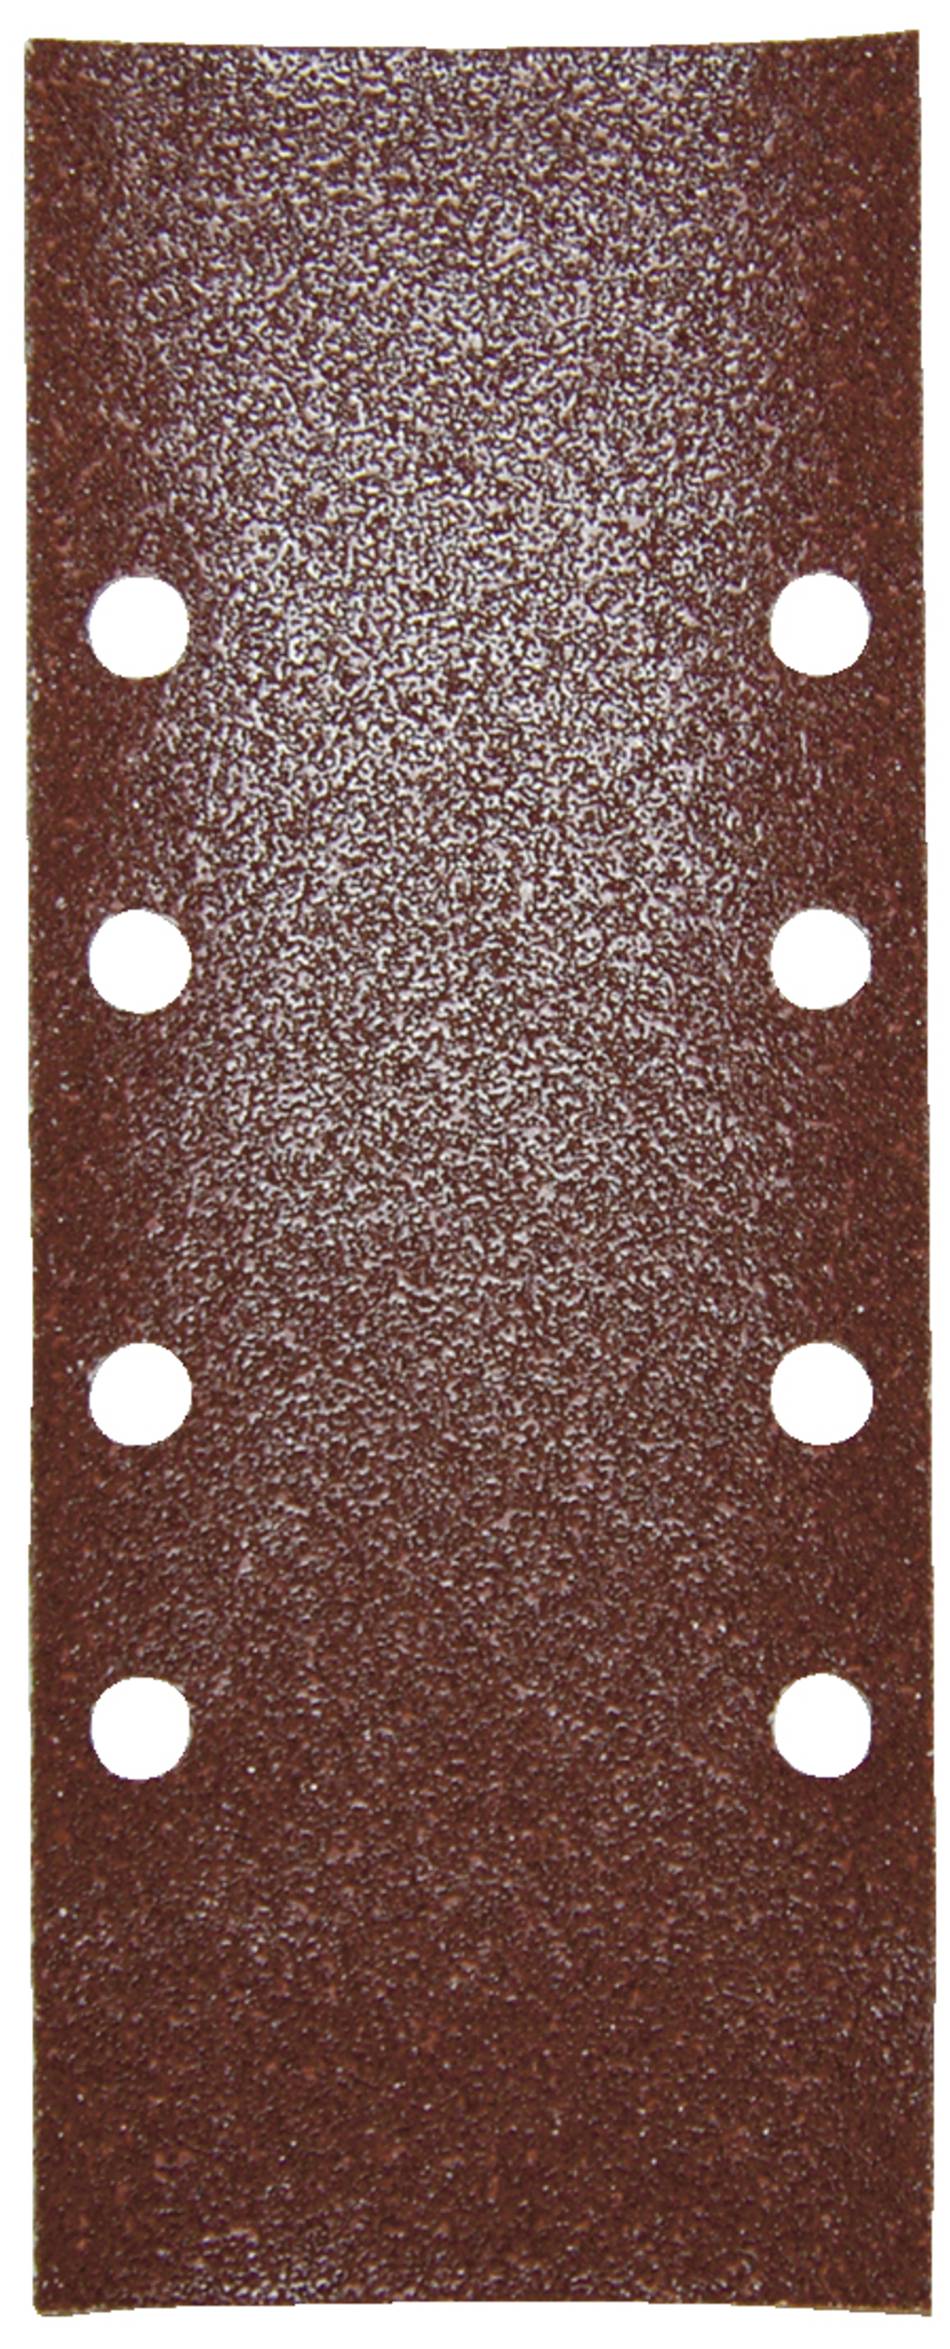 MAKITA - Schleifpapier - für Holz, Metall - 10 Stücke - rechteckig - Körnung: P240 - 93 mm x 230 mm